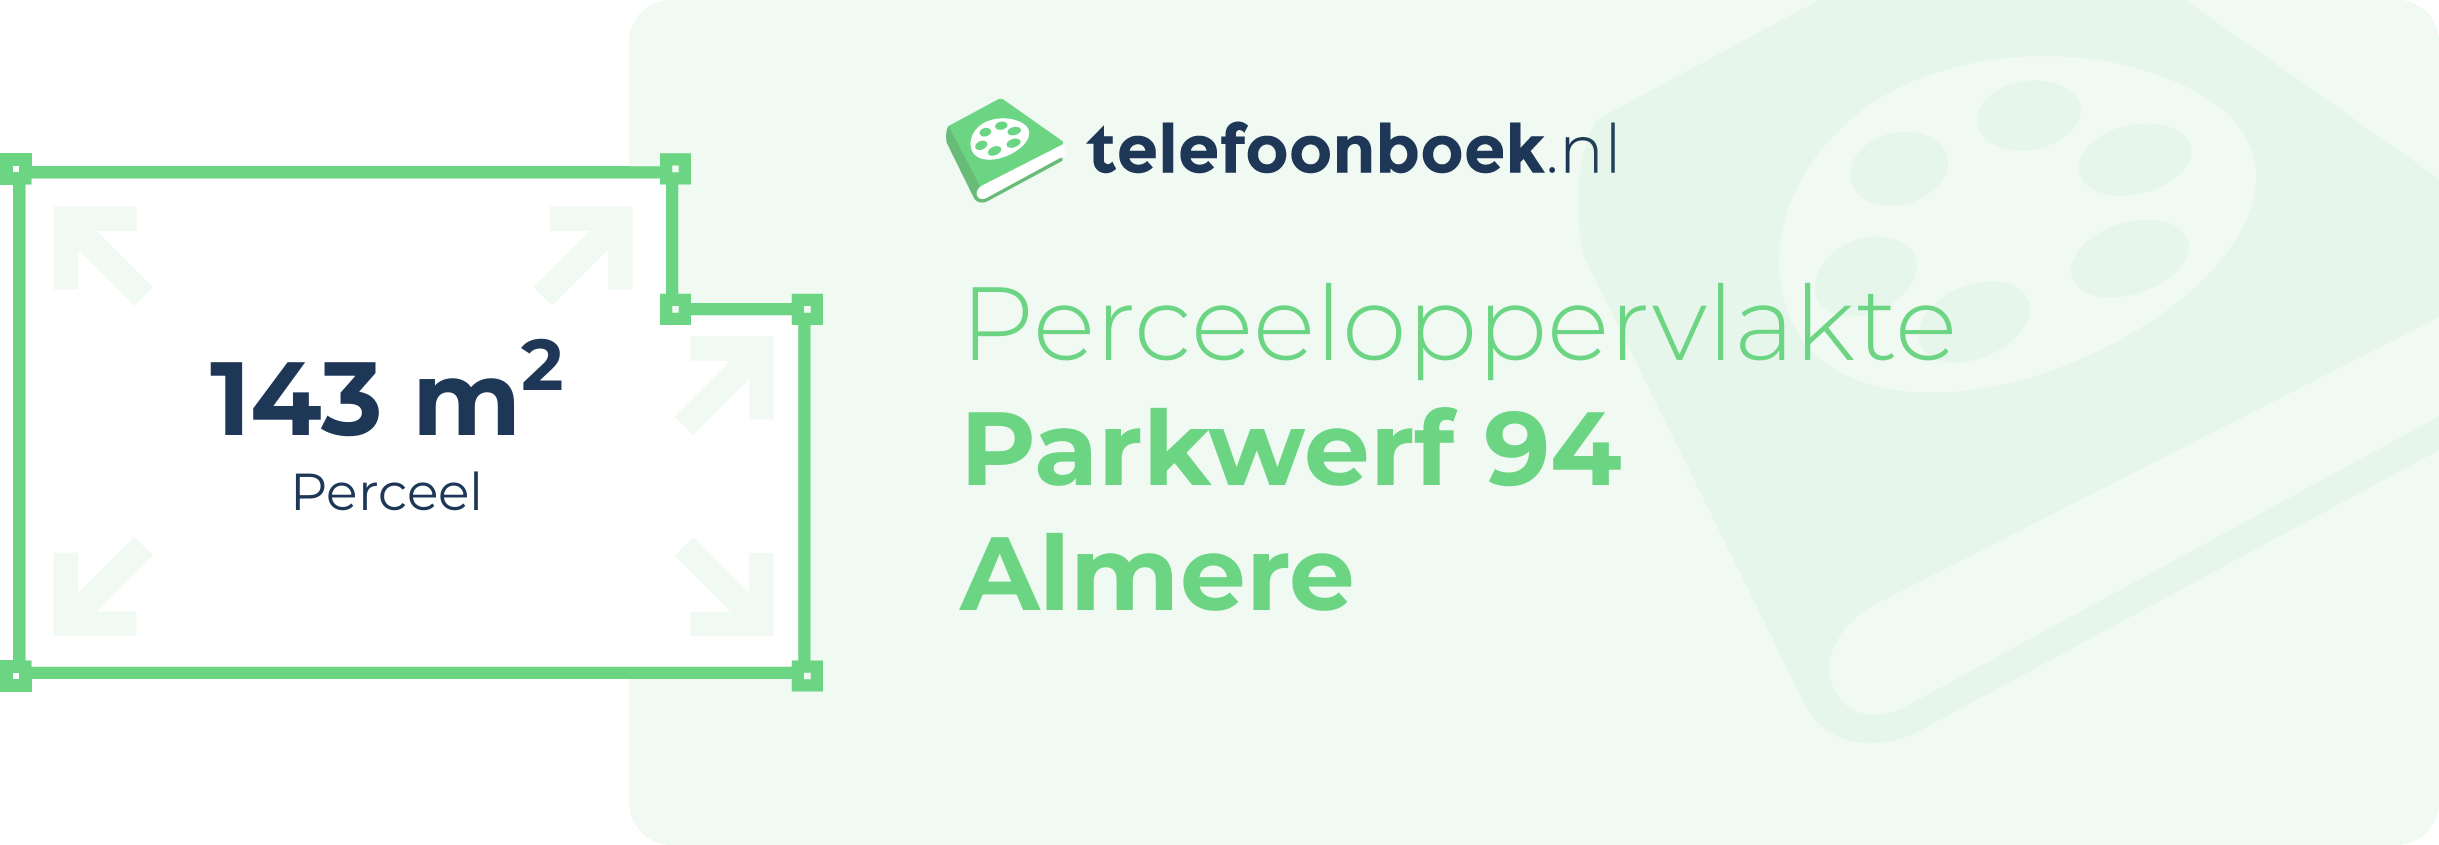 Perceeloppervlakte Parkwerf 94 Almere